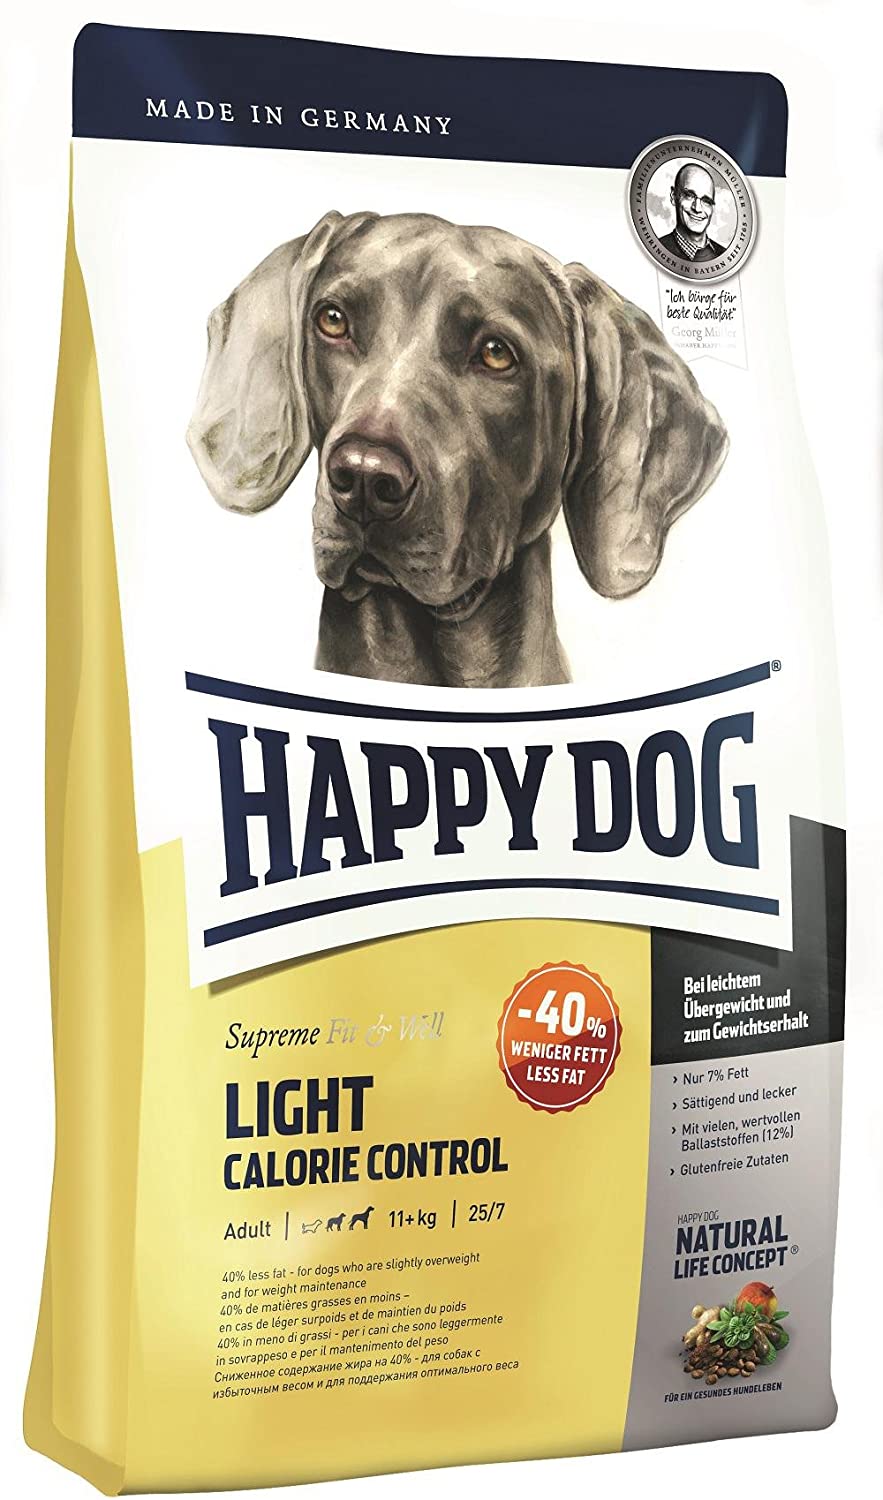  Happy Dog Fit & Well Light Calorie Control Comida para Perros - 12500 gr 